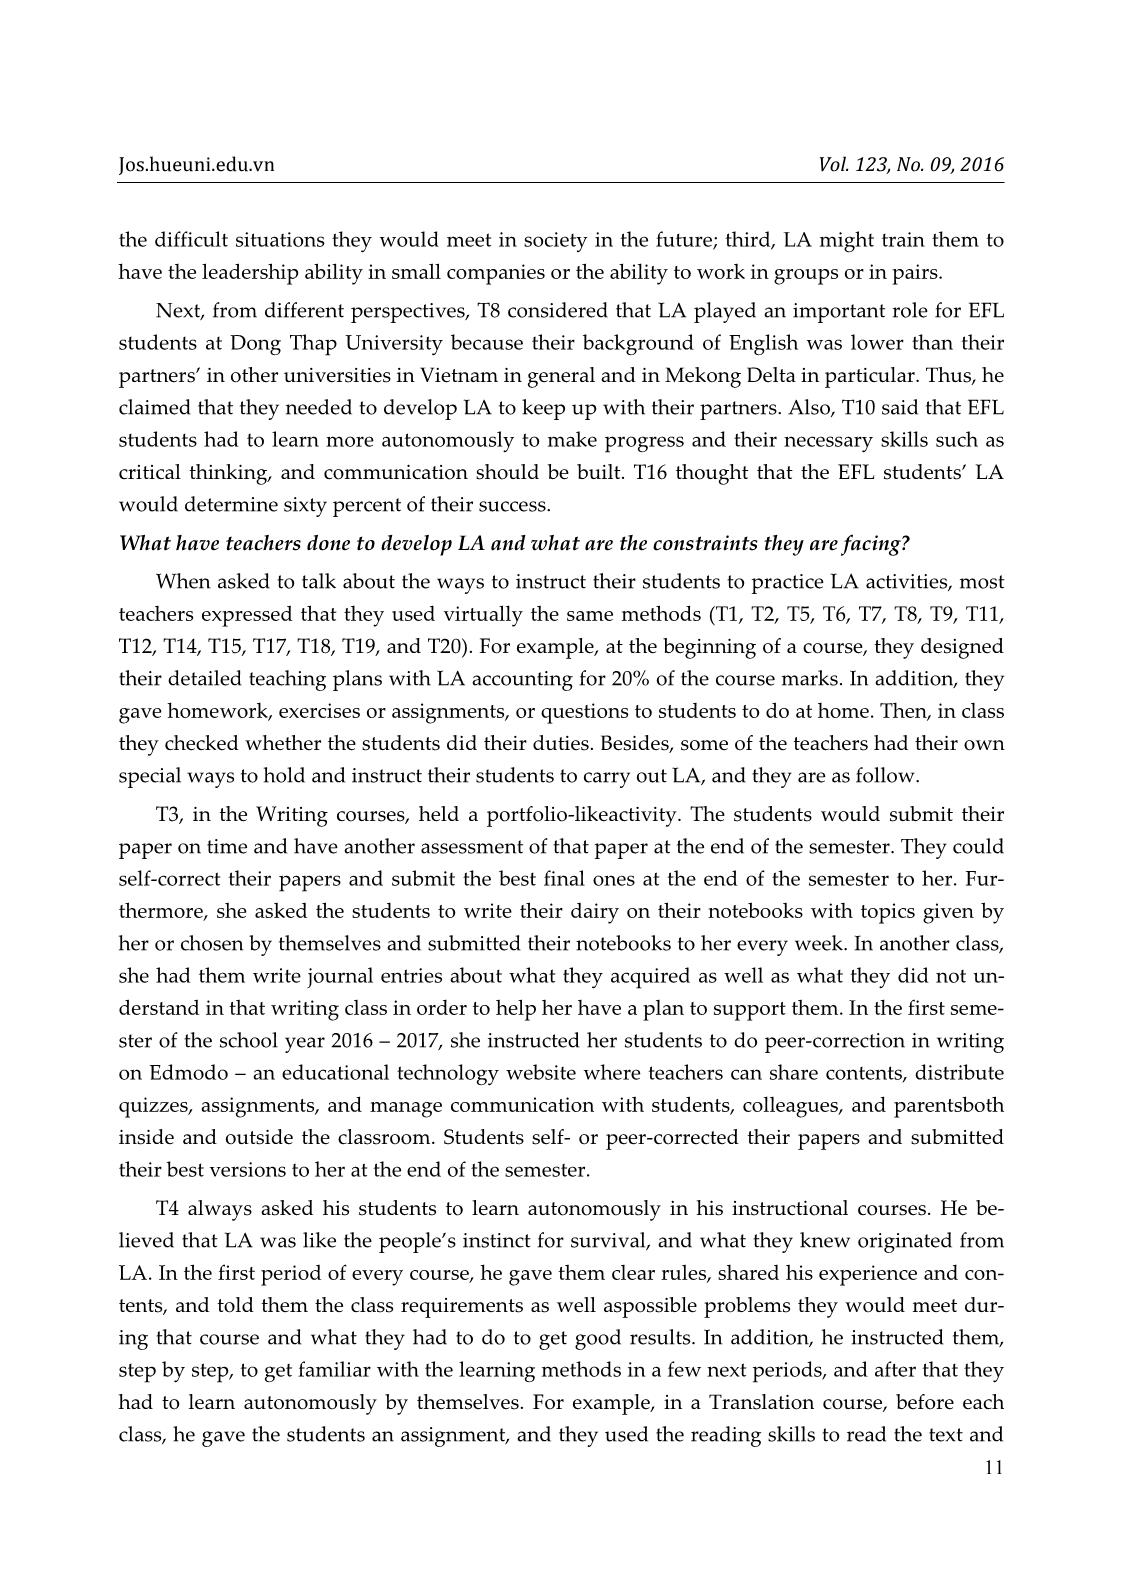 EFL teachers’ perceptions and practices regarding learner autonomy at Dong Thap University, Vietnam trang 7